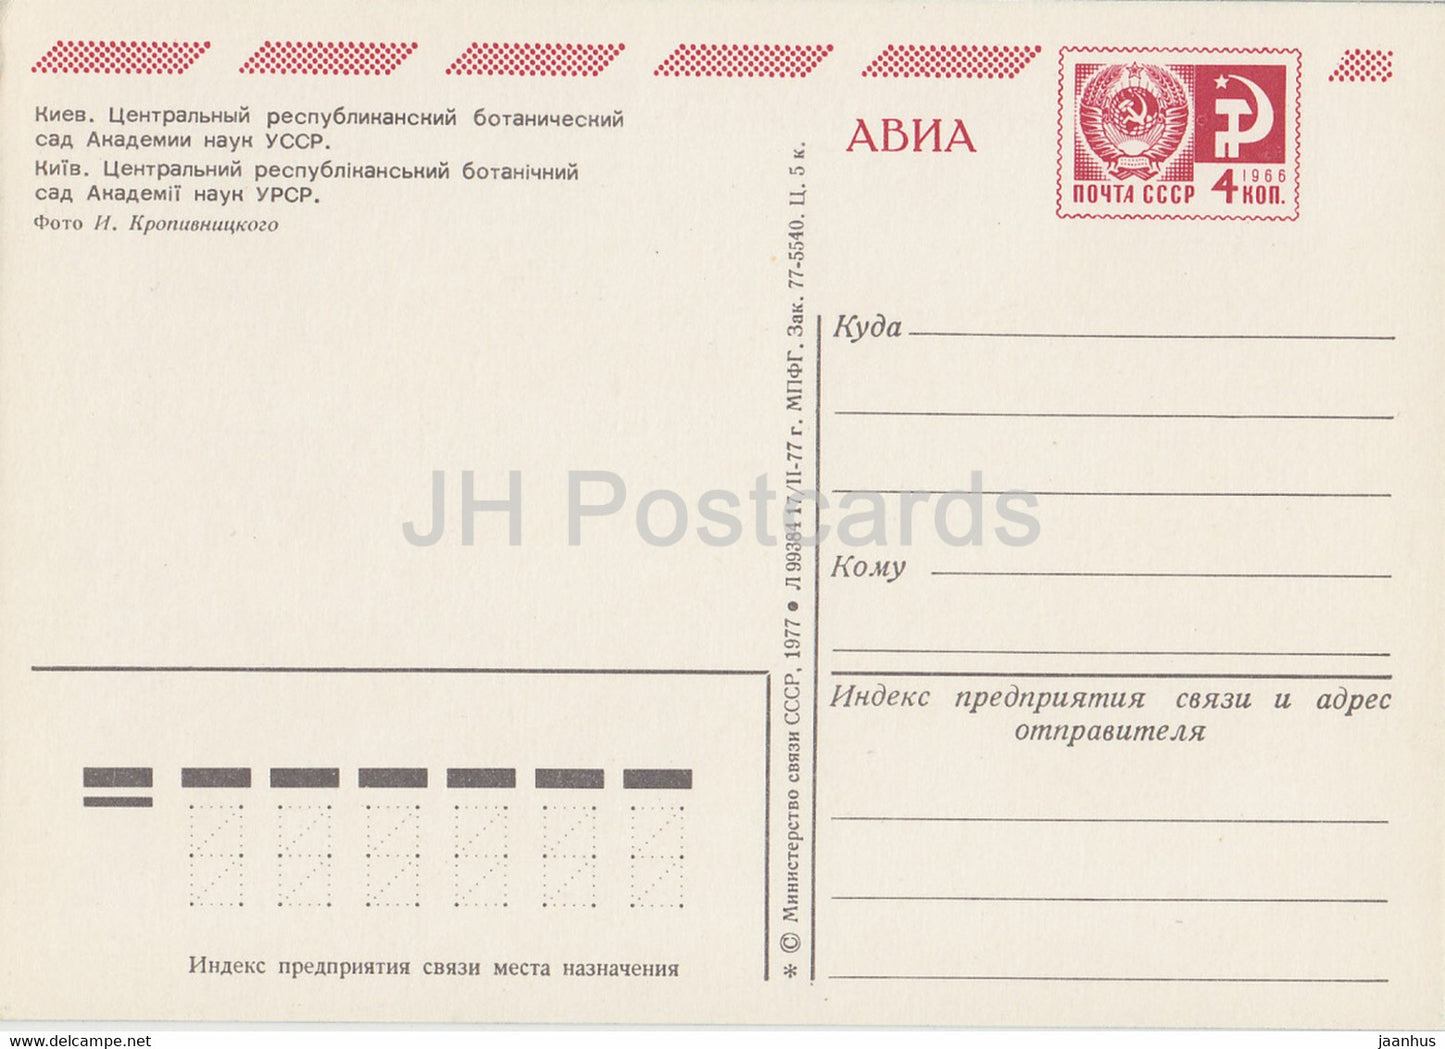 Kyiv - Kiev - Central Botanical Garden - AVIA - postal stationery - 1977 - Ukraine USSR - unused